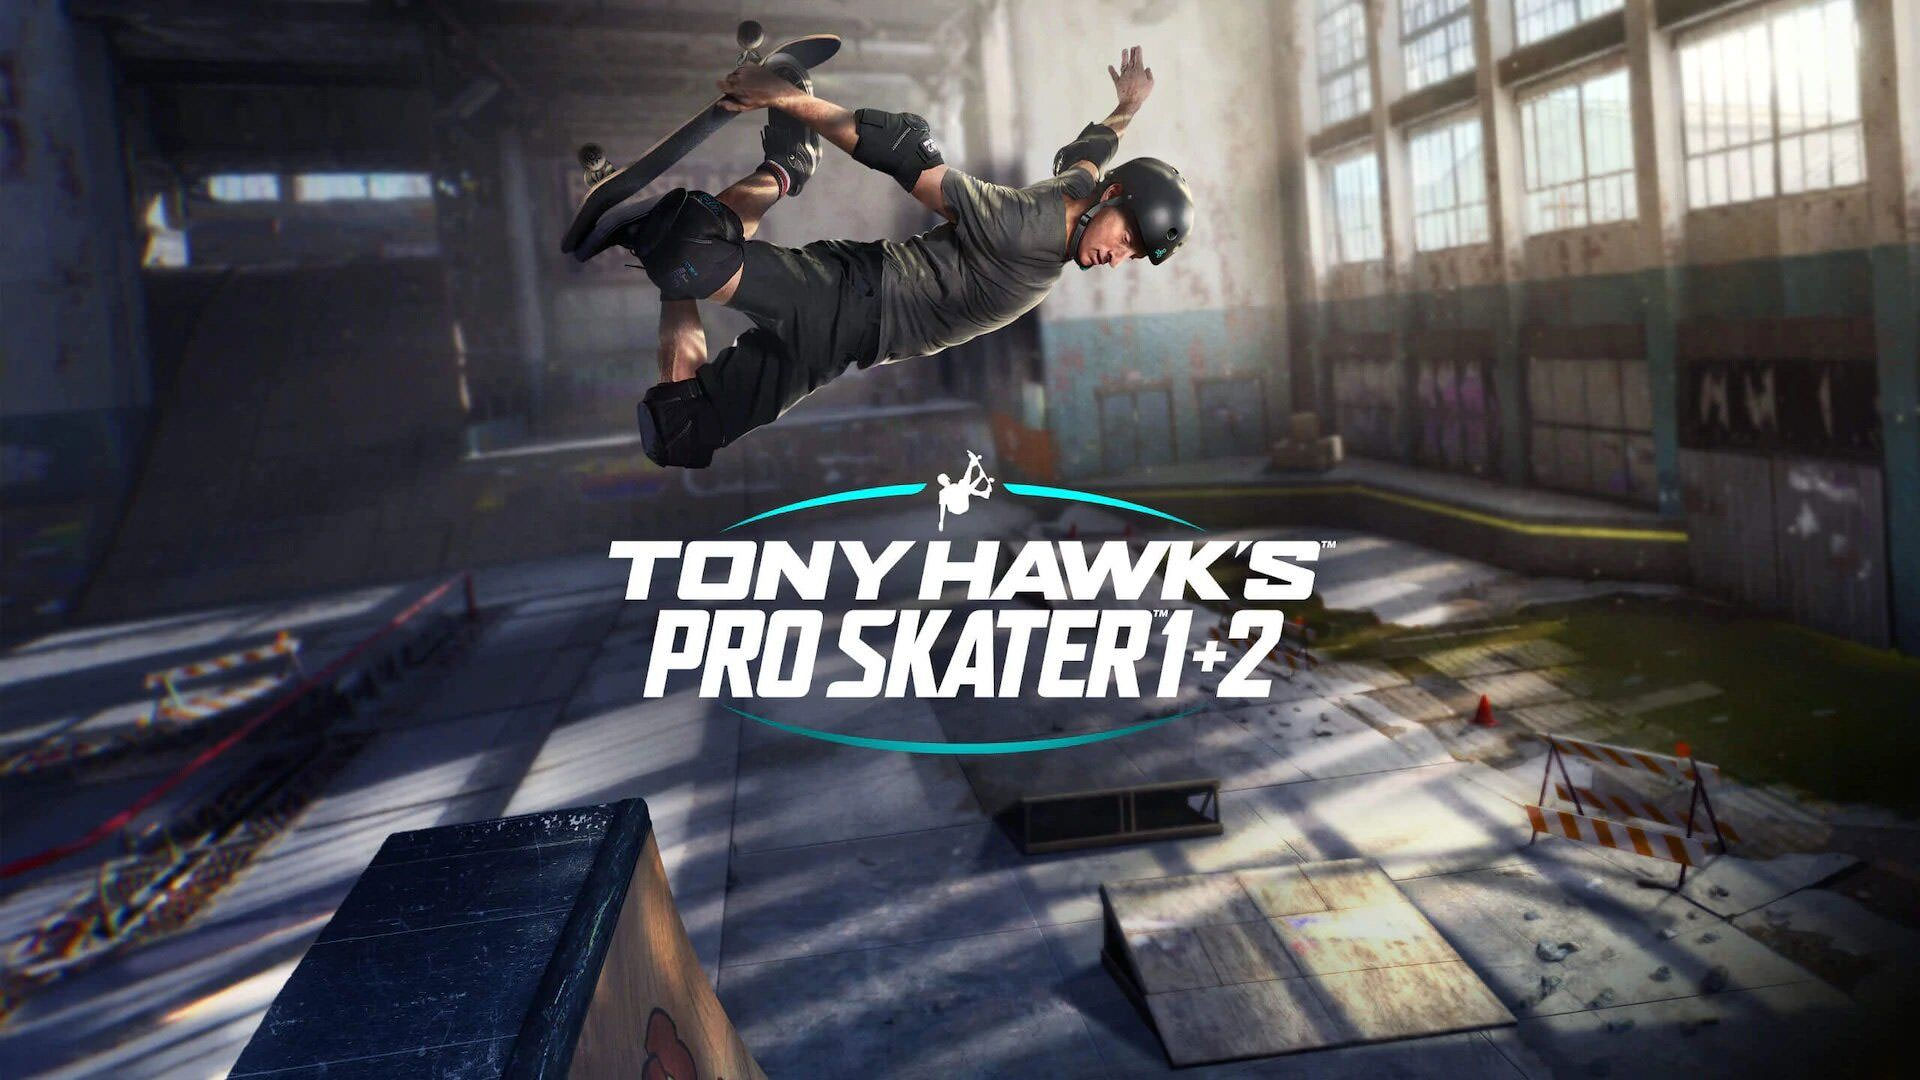  Tony Hawk's Pro Skater 1+2 در راه پلتفرم های جدید